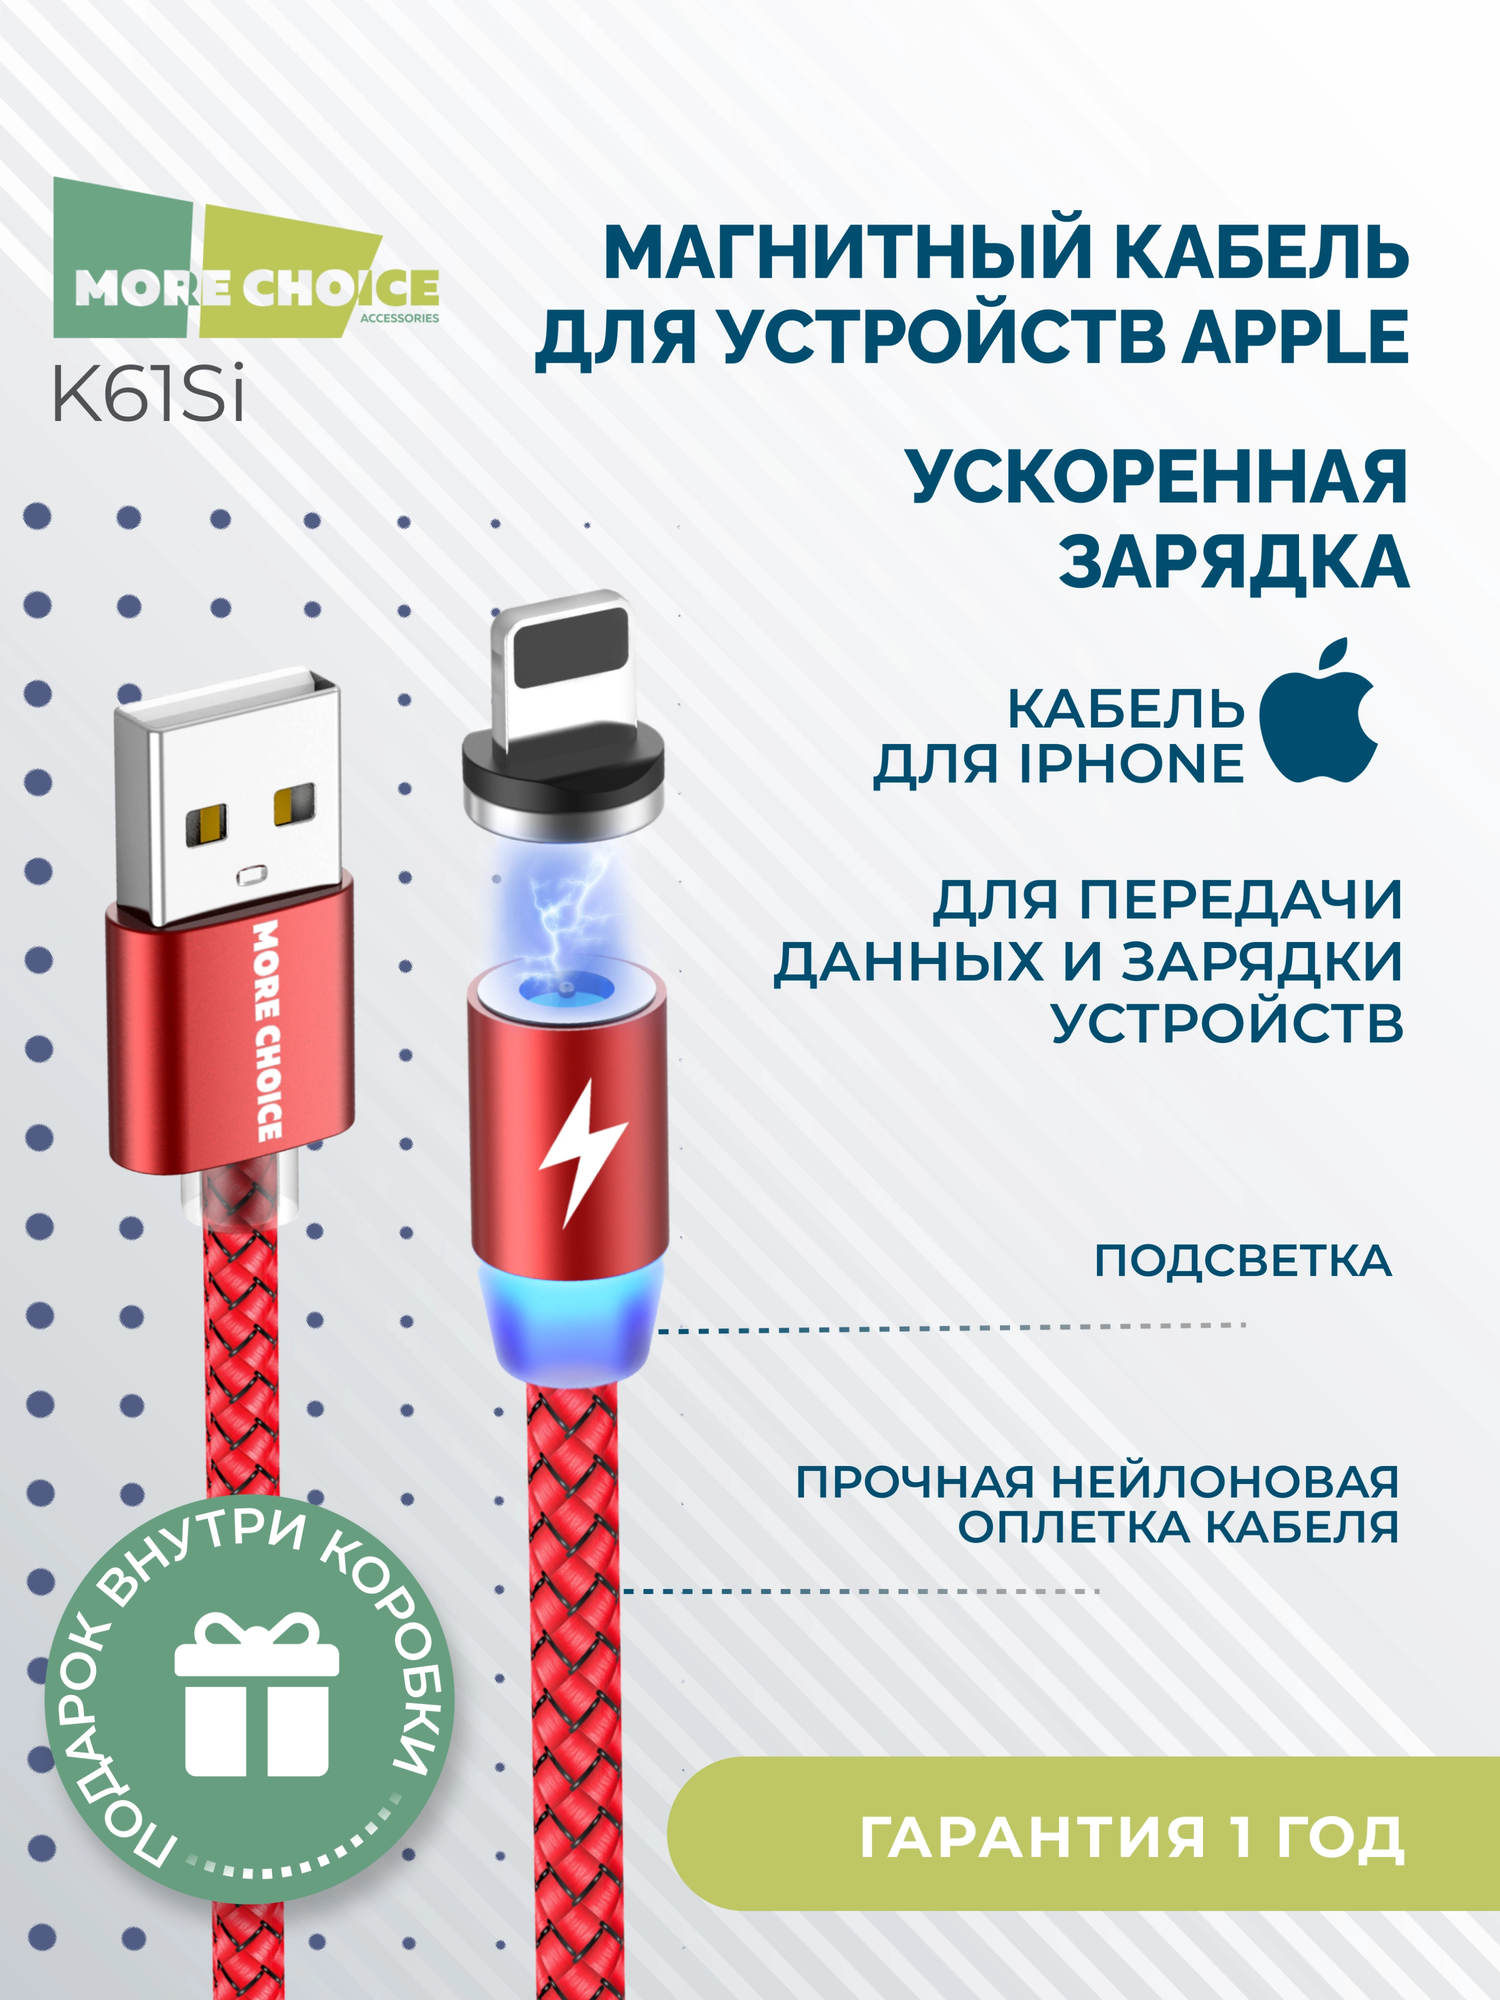 Дата-кабель Smart USB 2.4A для Lightning 8-pin Magnetic More choice K61Si нейлон 1м Red